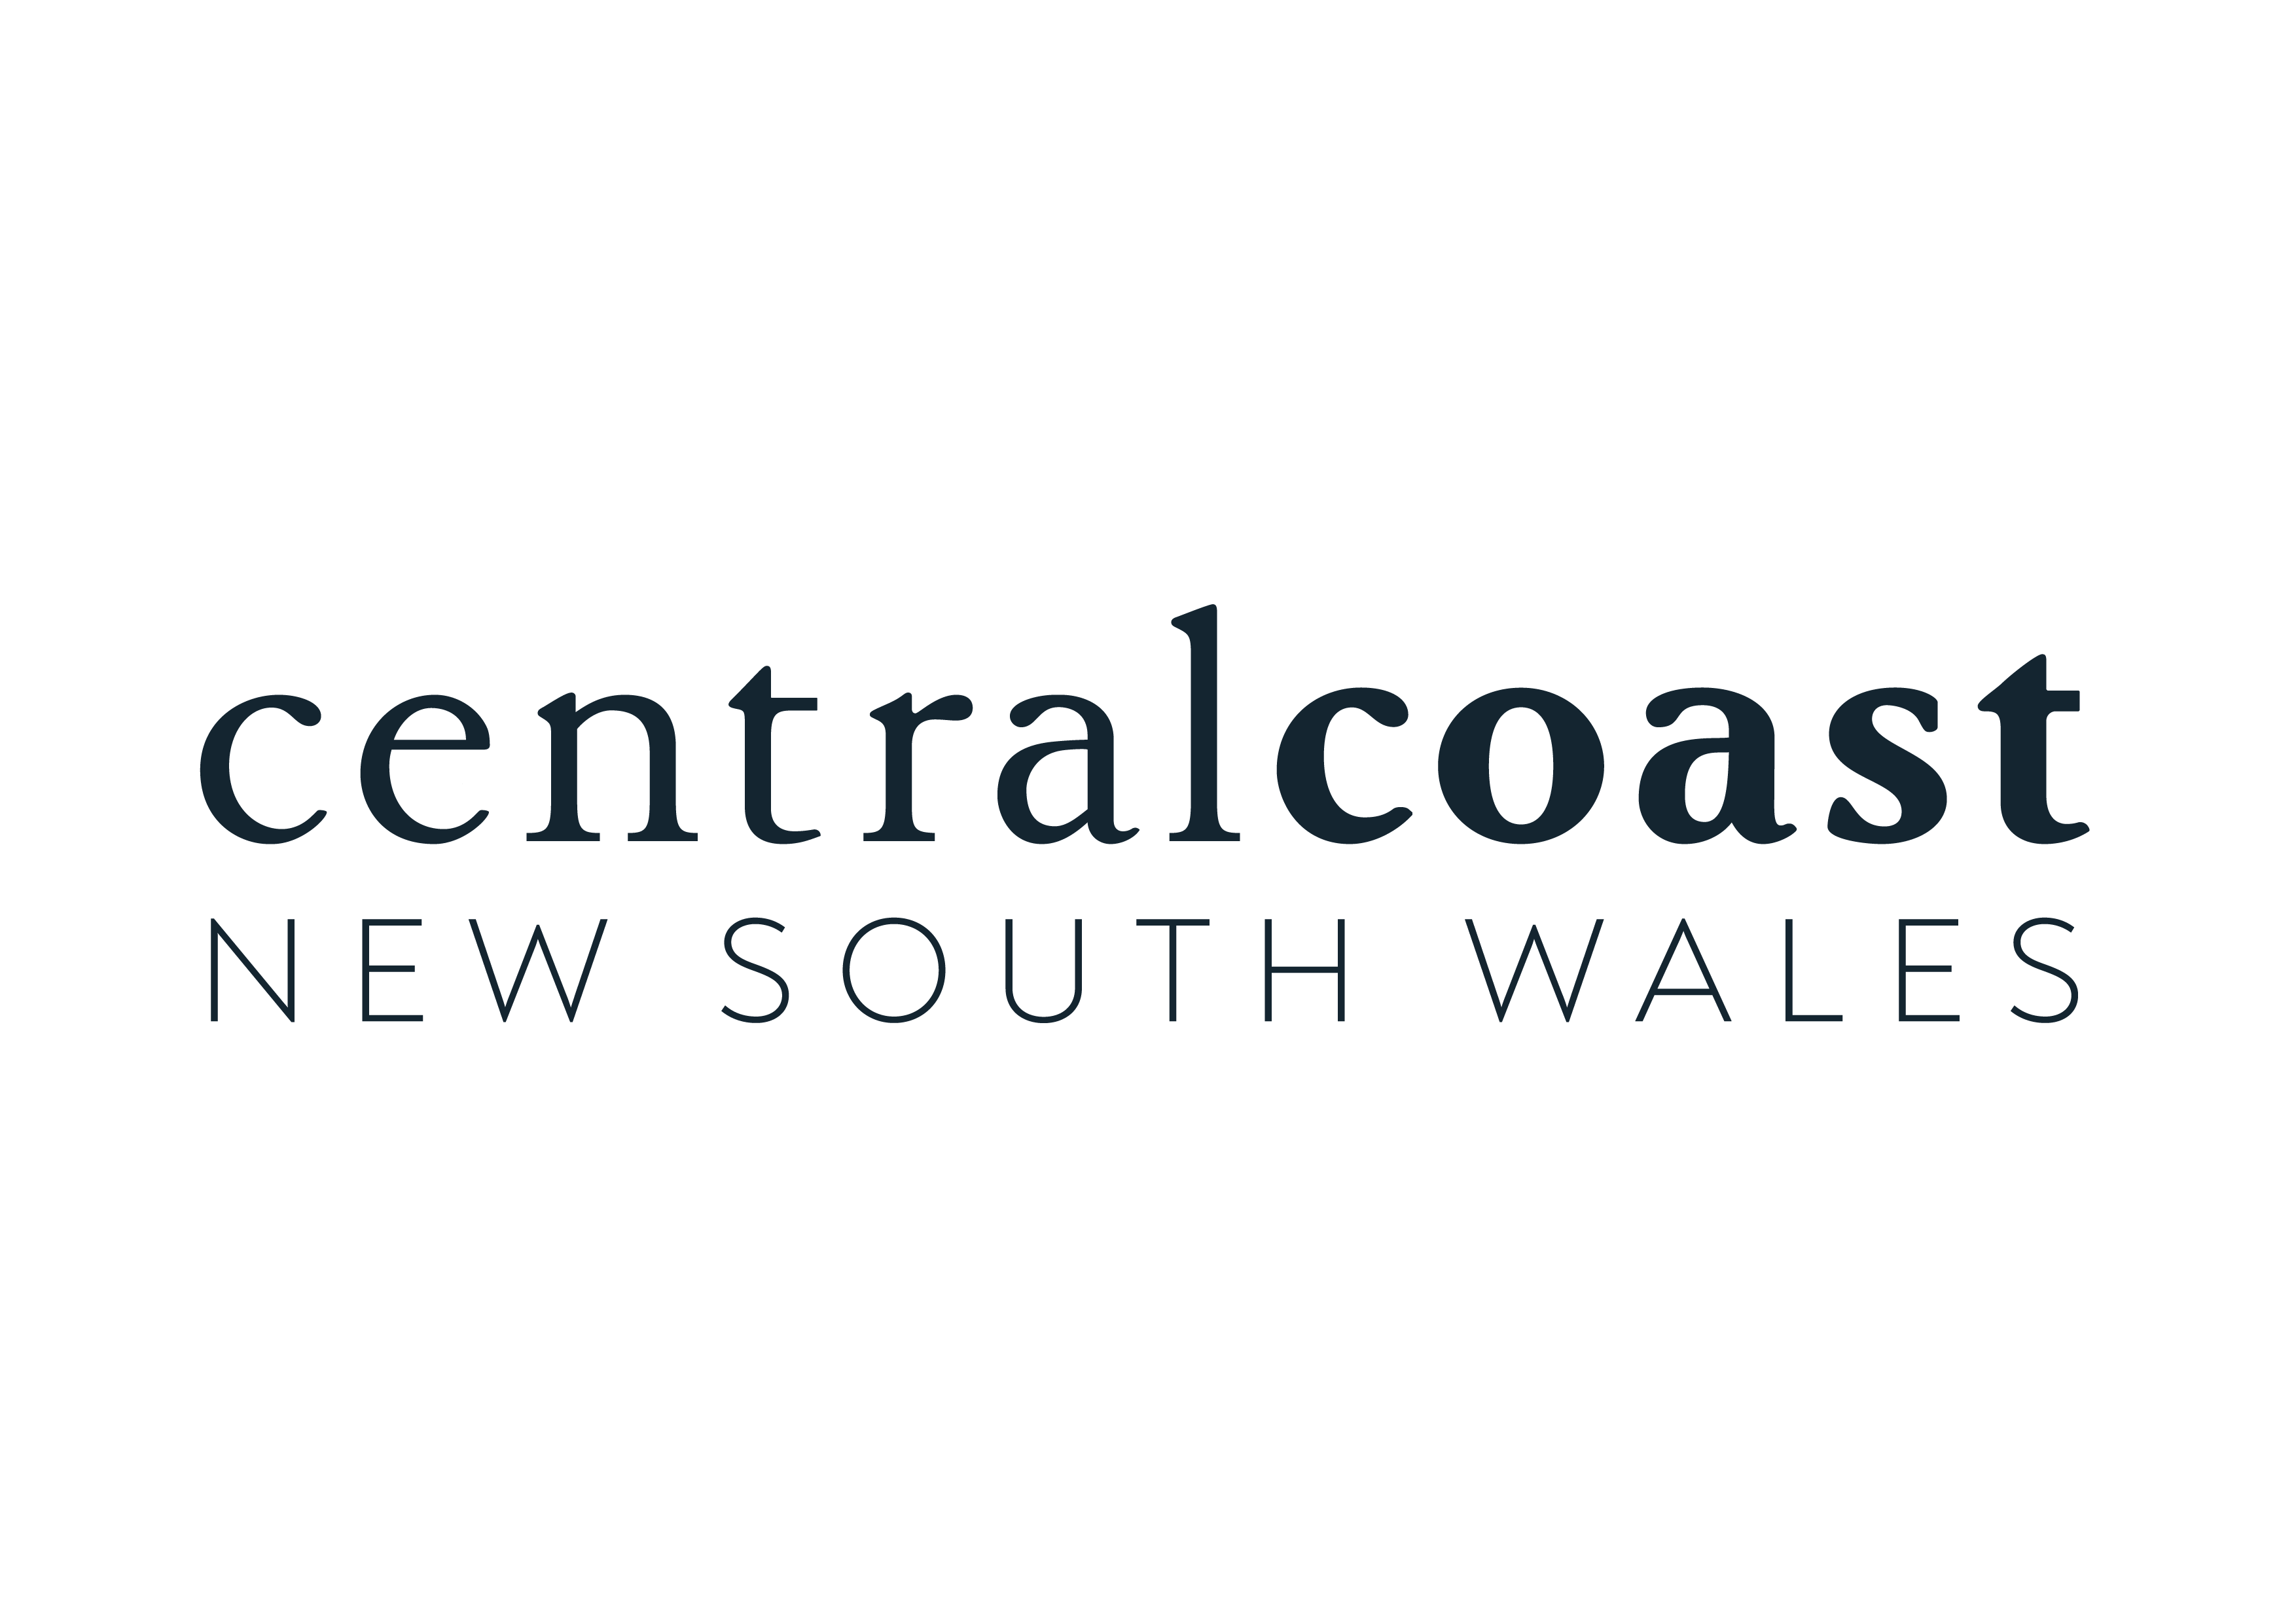 destination central coast new south wales official logo 